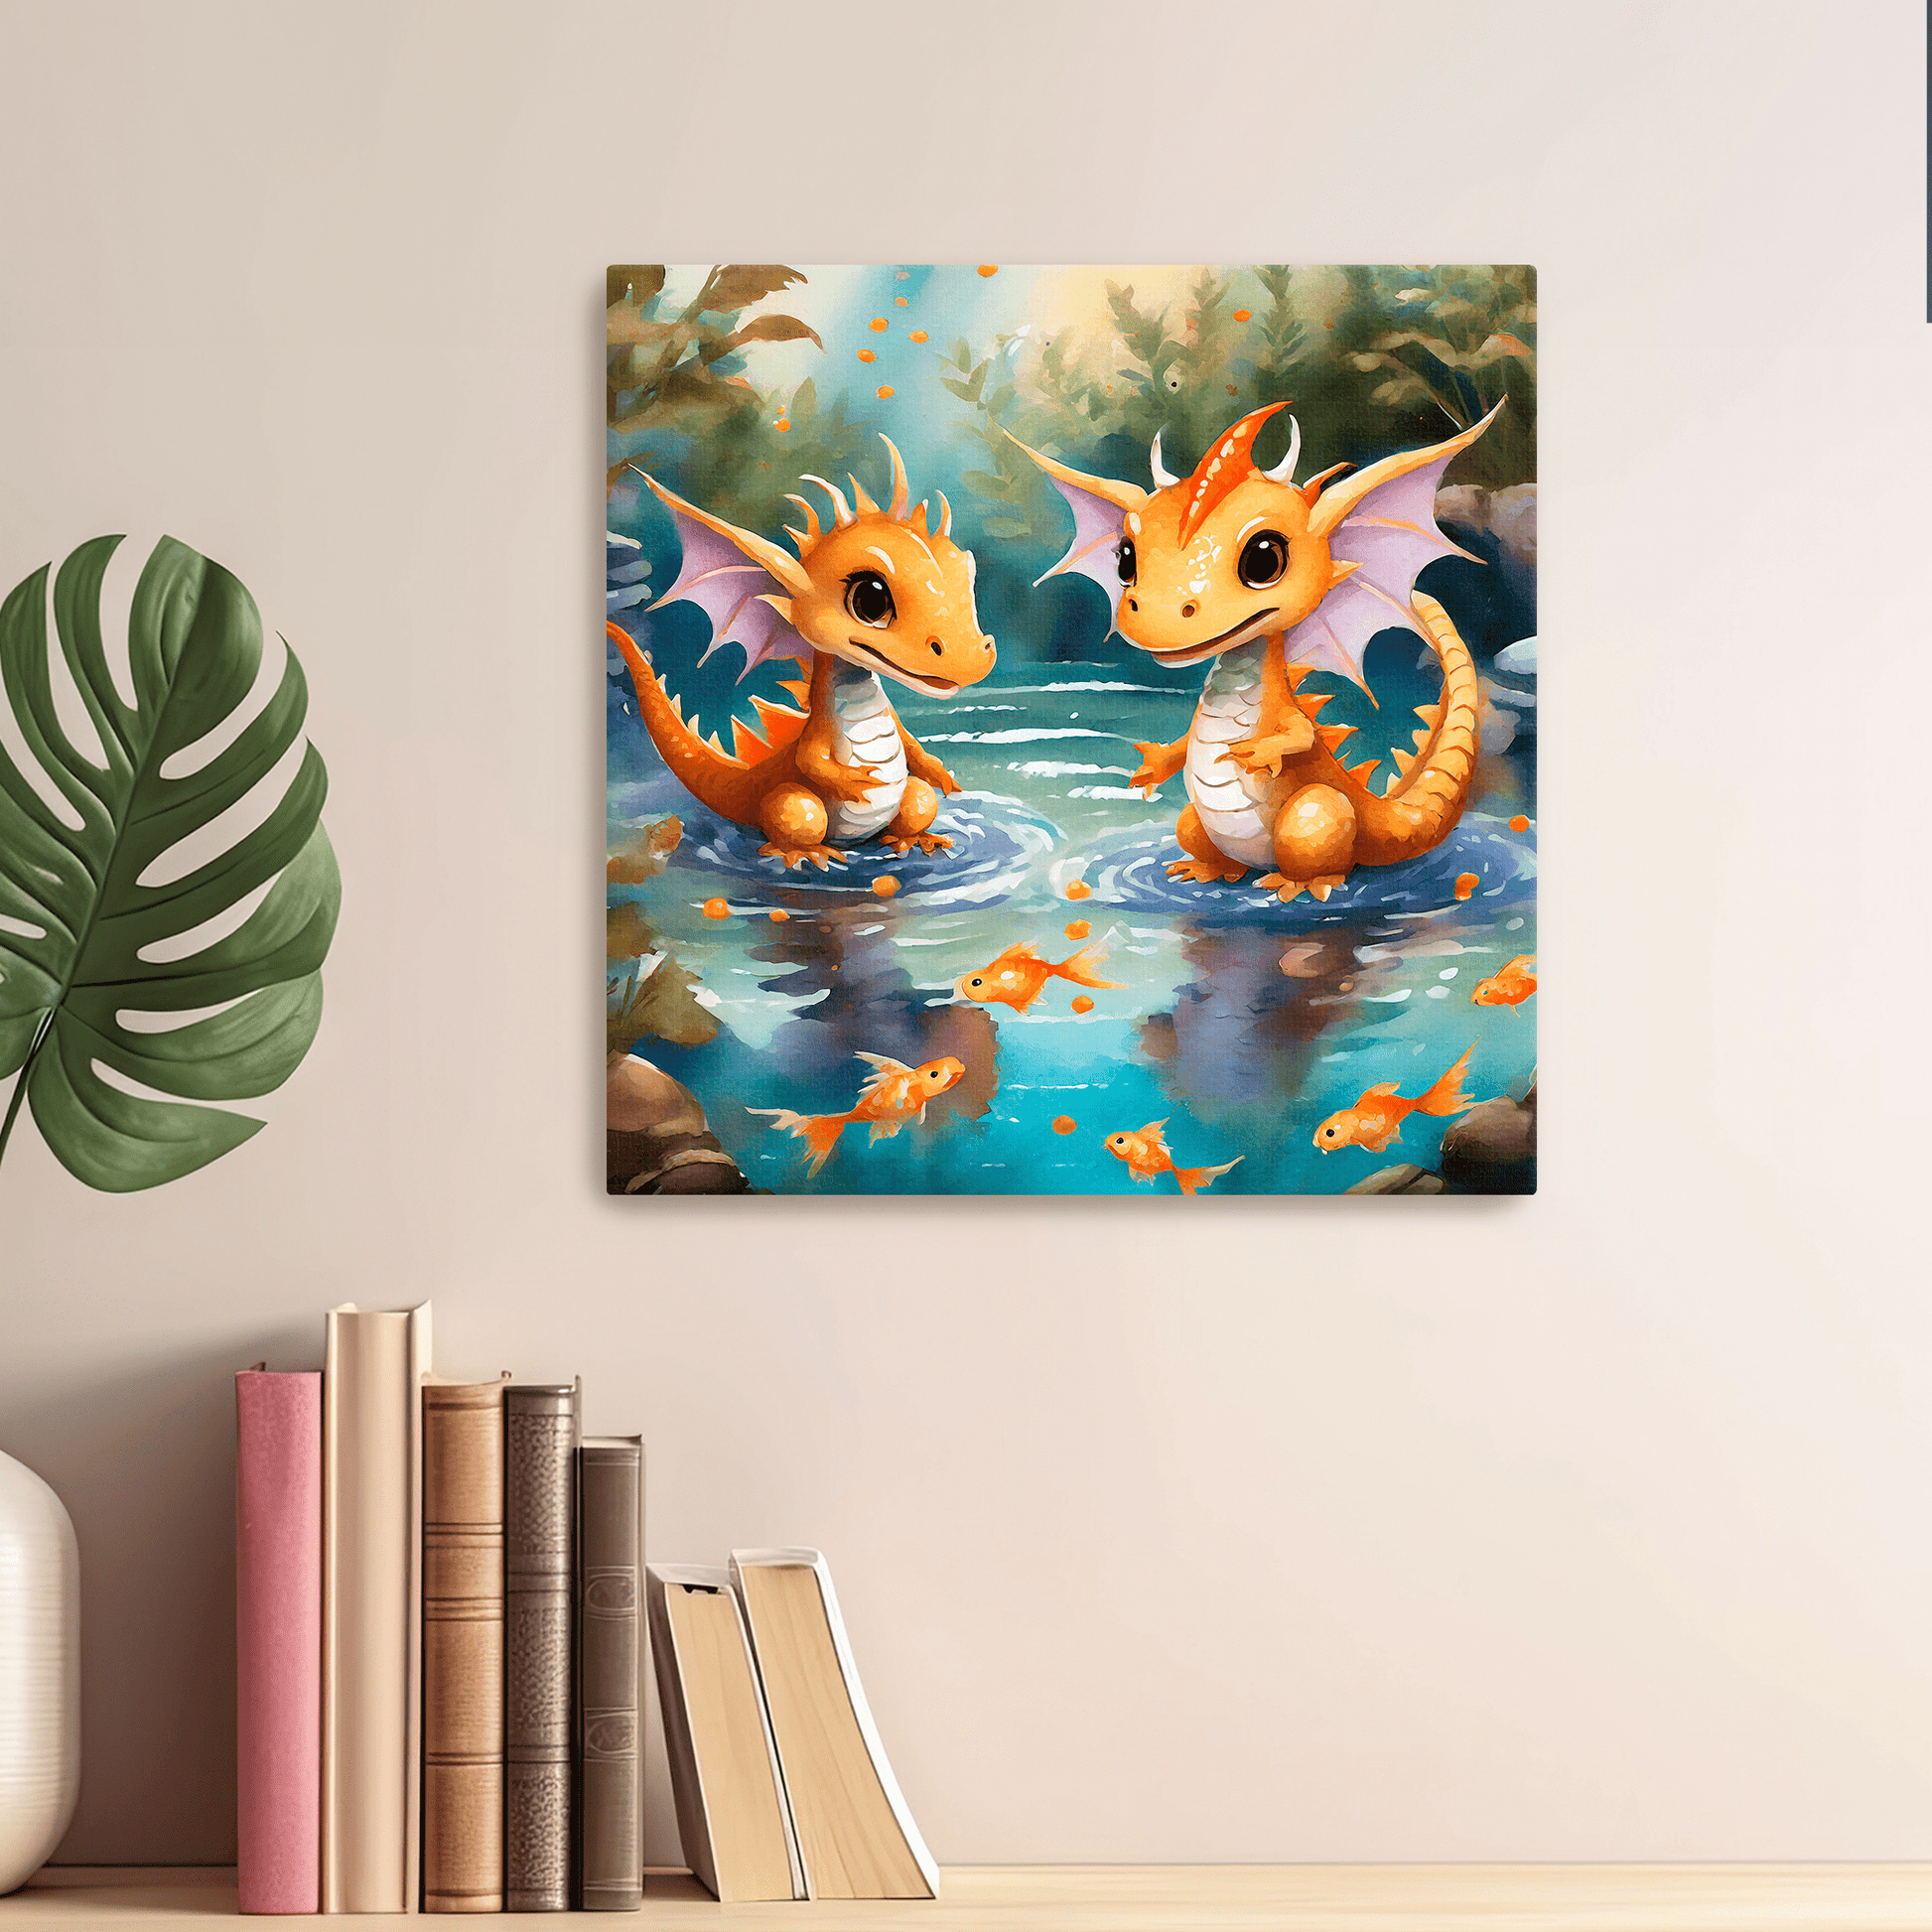 Baby Dragons Play with Goldfish - Metal Poster - Premium Metal Print